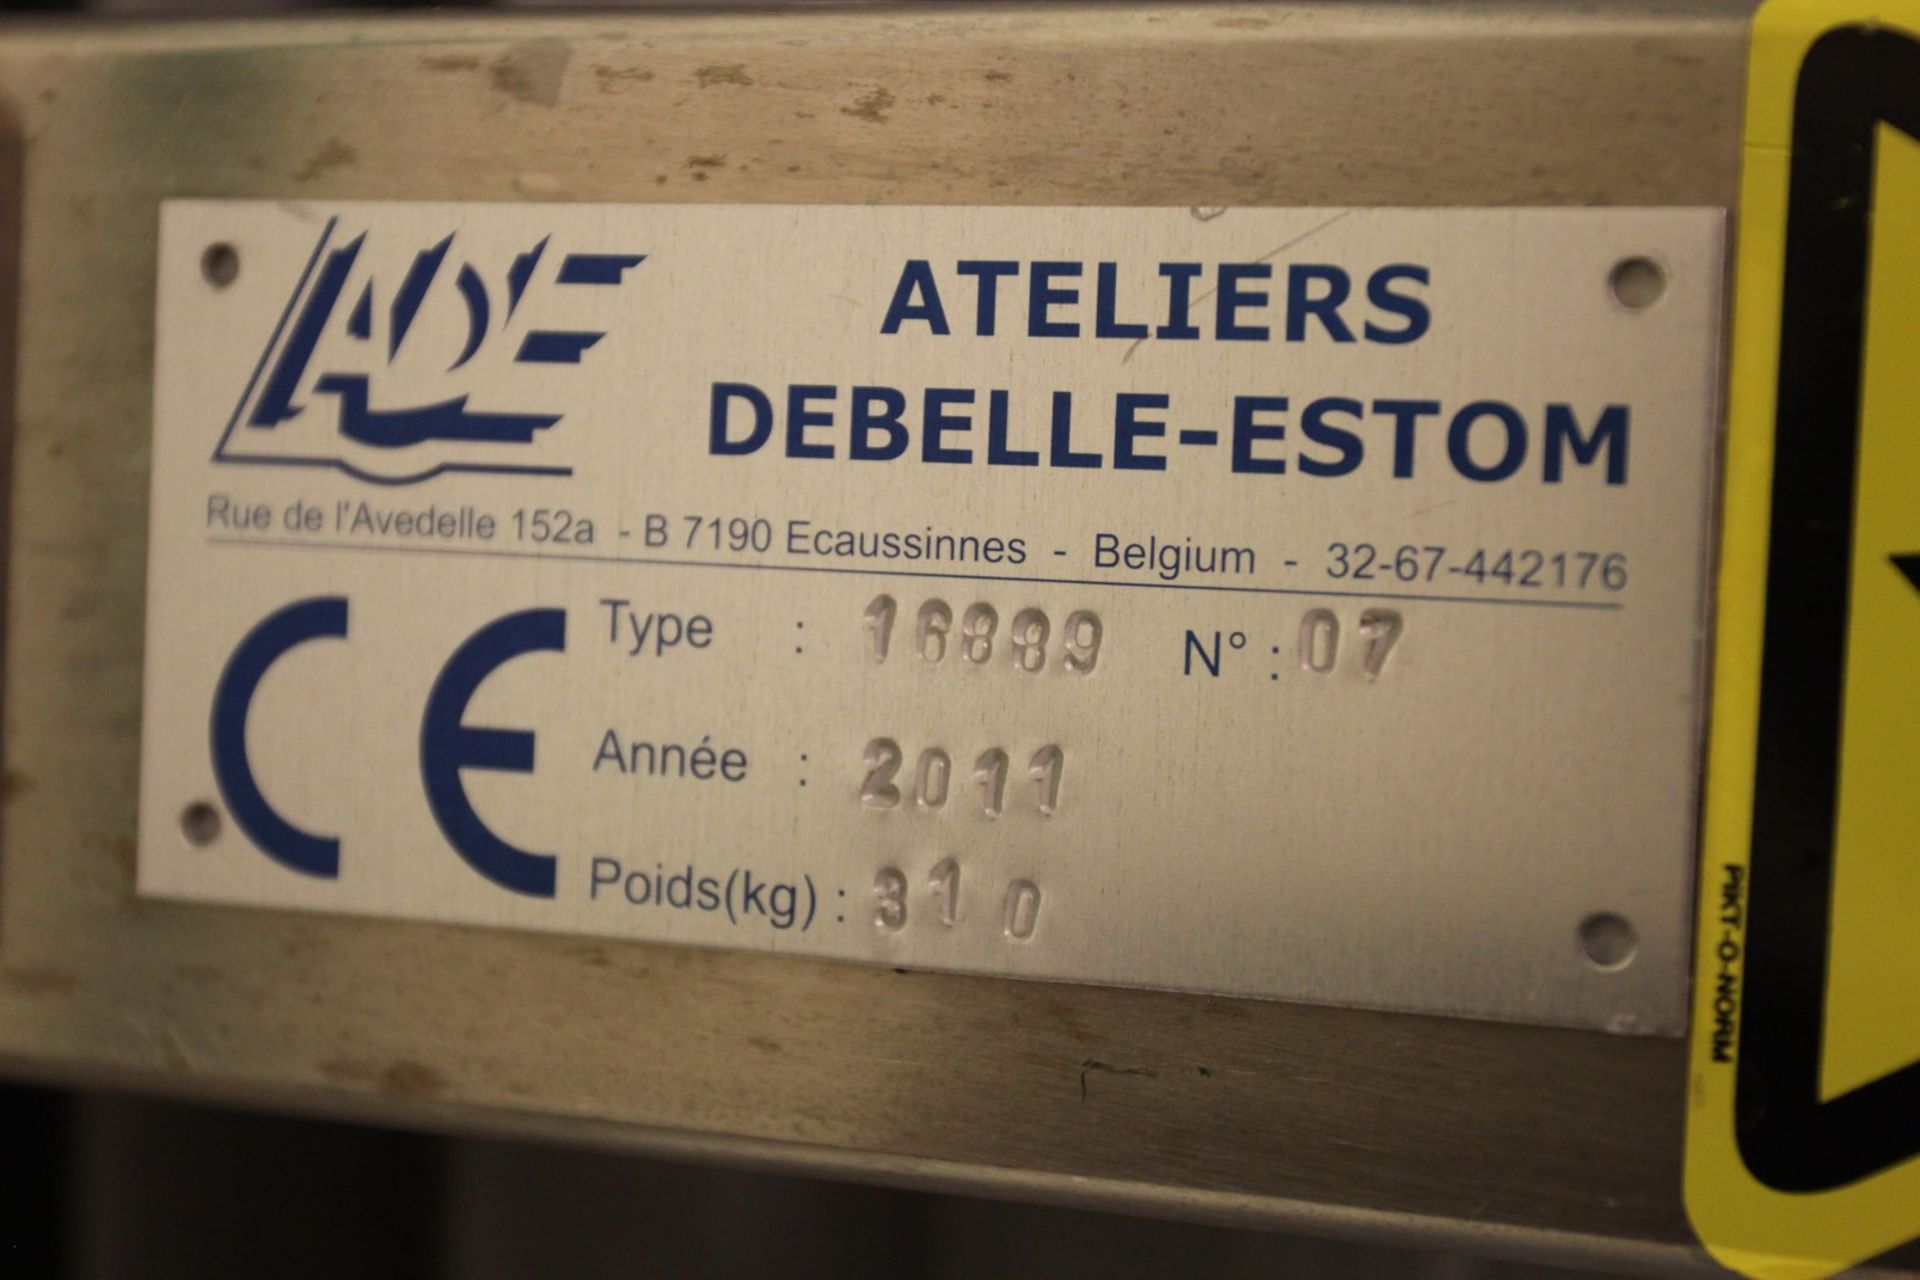 2011 ADE Ateliers Debelle-Estom 16889 Mobile Electric Lift Table, s/n 07 - Bild 4 aus 4